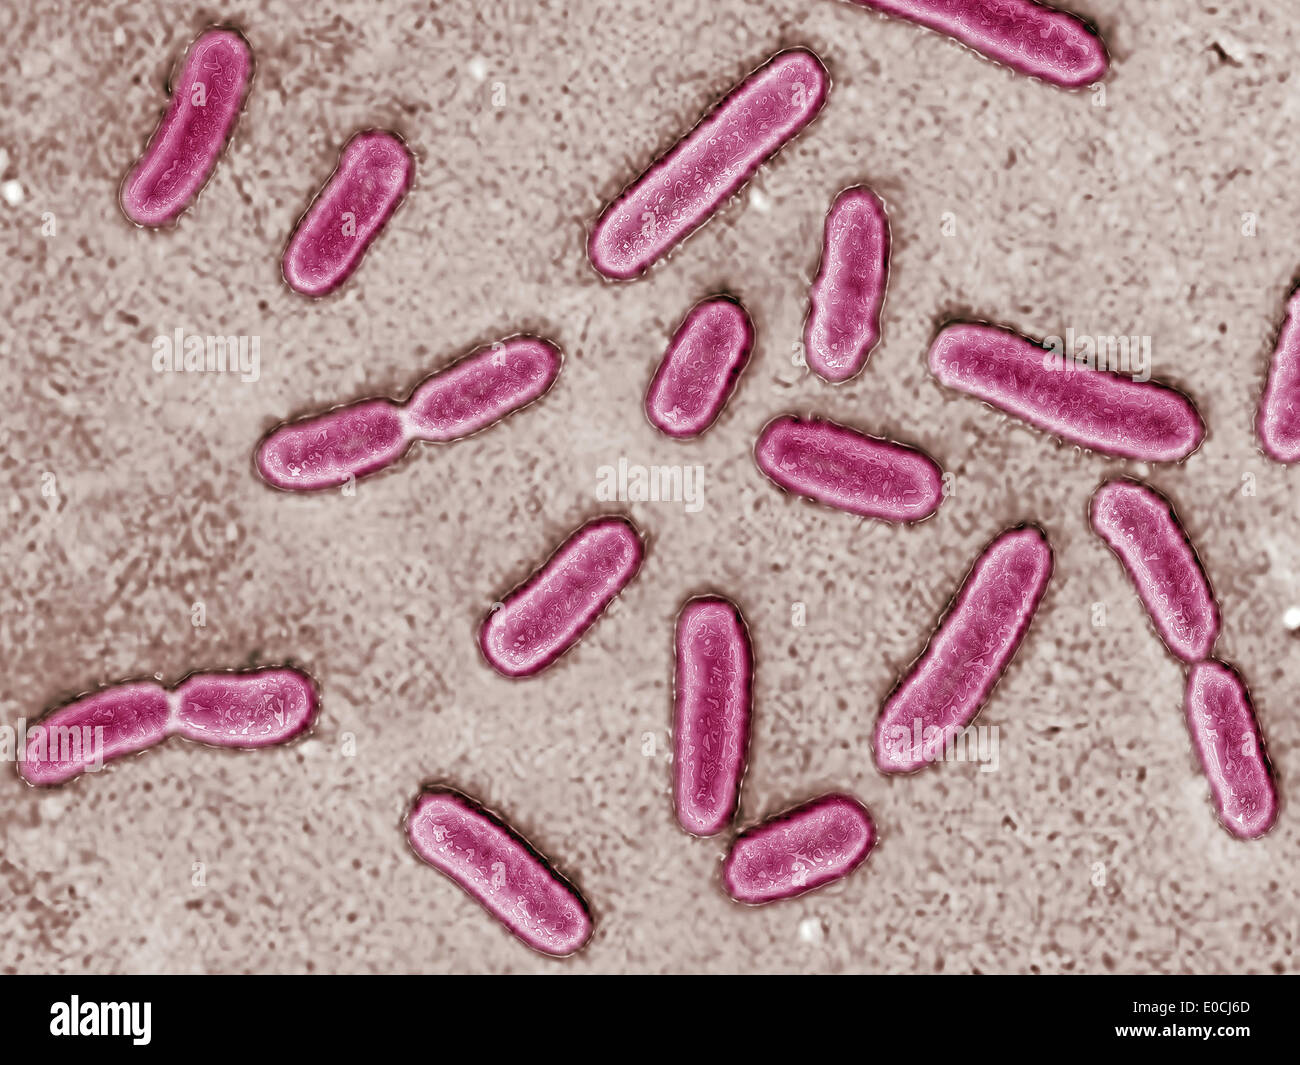 Pseudomonas aeruginosa microscope hi-res stock photography and images -  Alamy